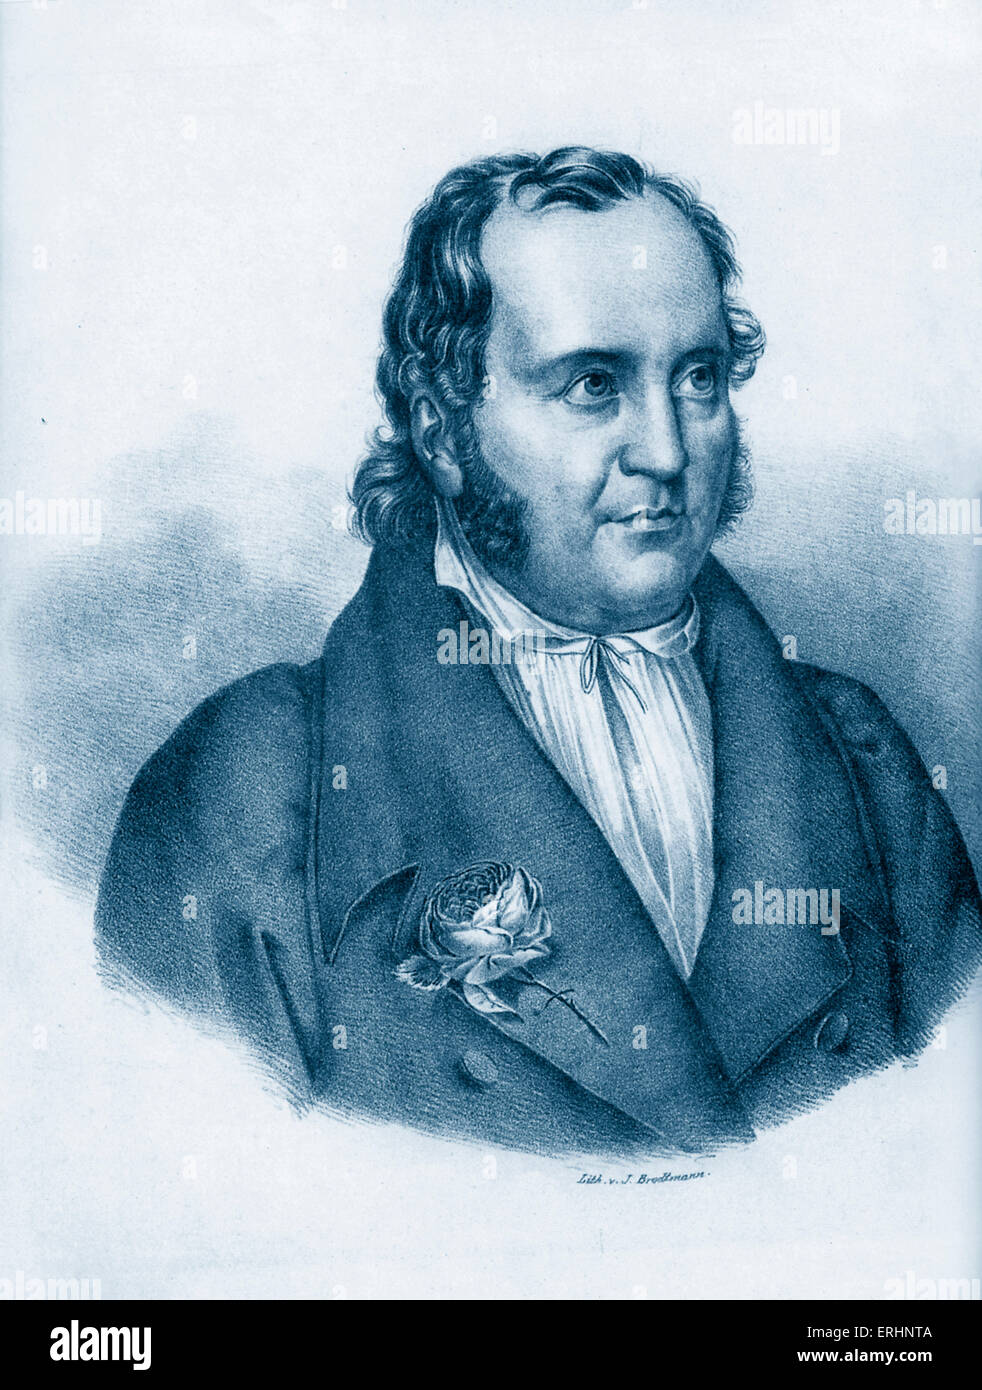 Johann Paul Friedrich Richter or Jean Paul Born Johann Paul Friedrich Richter. German writer.  21 March 1763 – 14 November 1825 Stock Photo